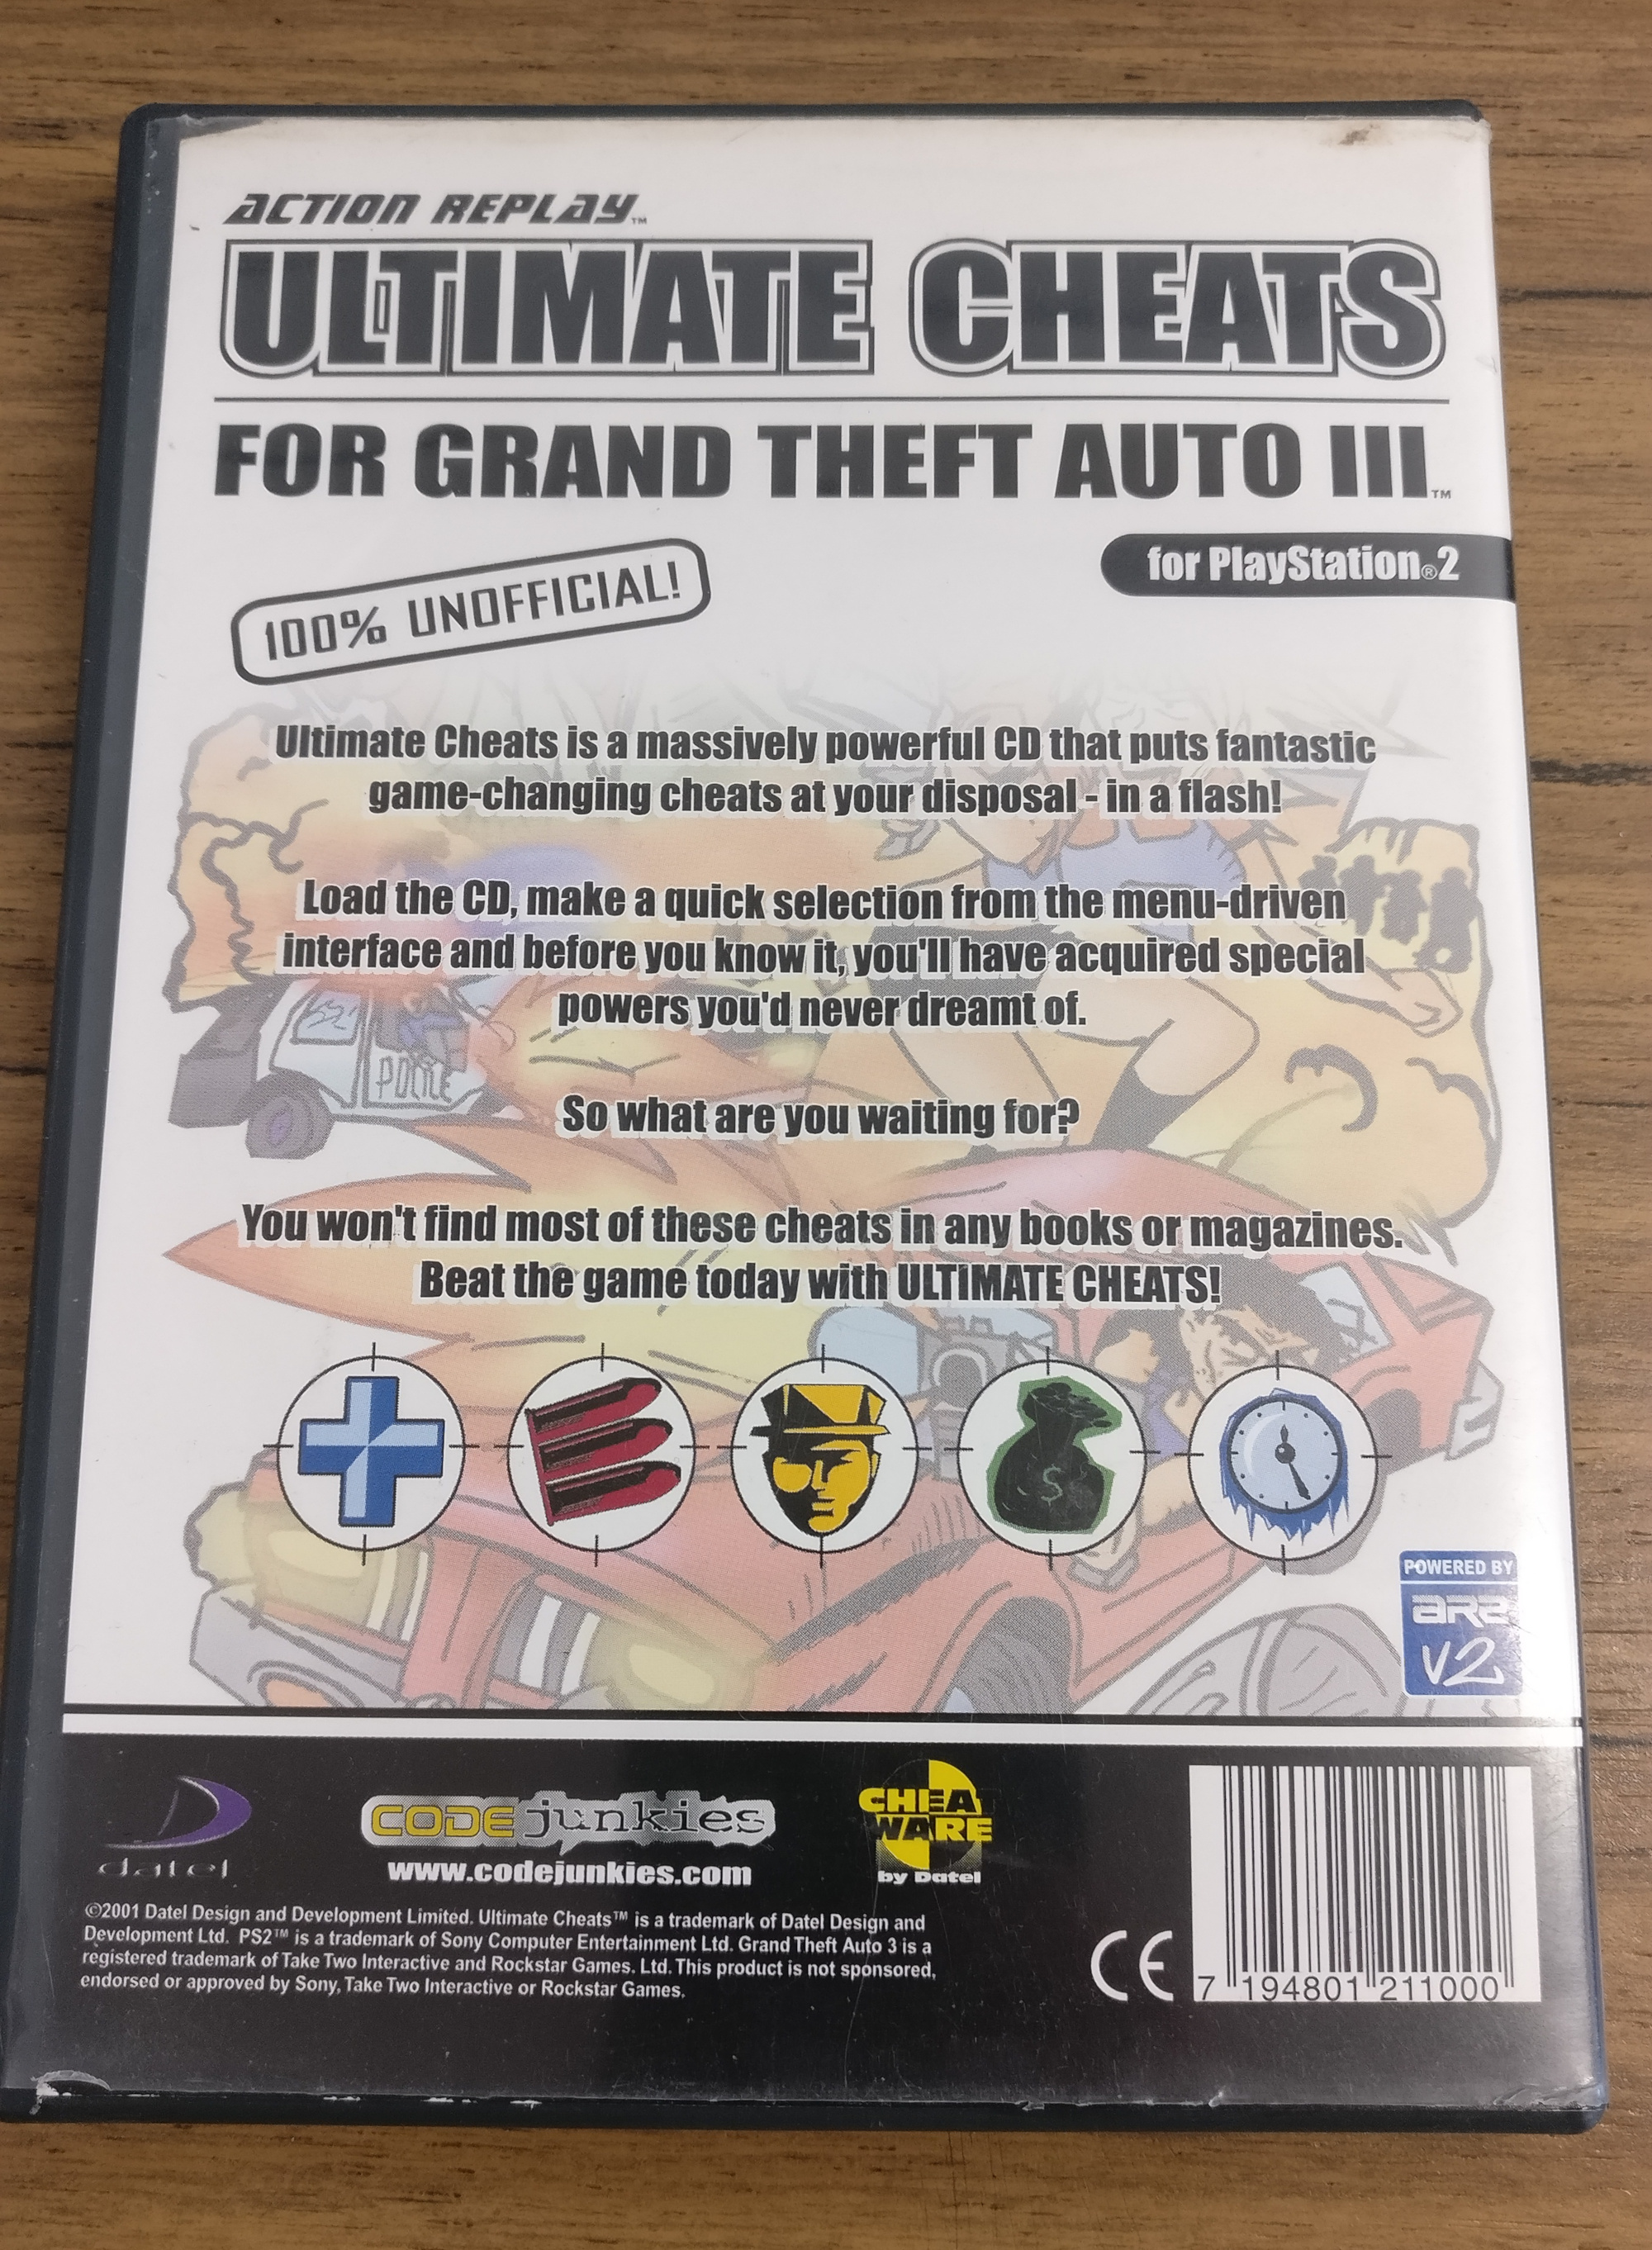 grand theft auto 3 cheat codes ps3